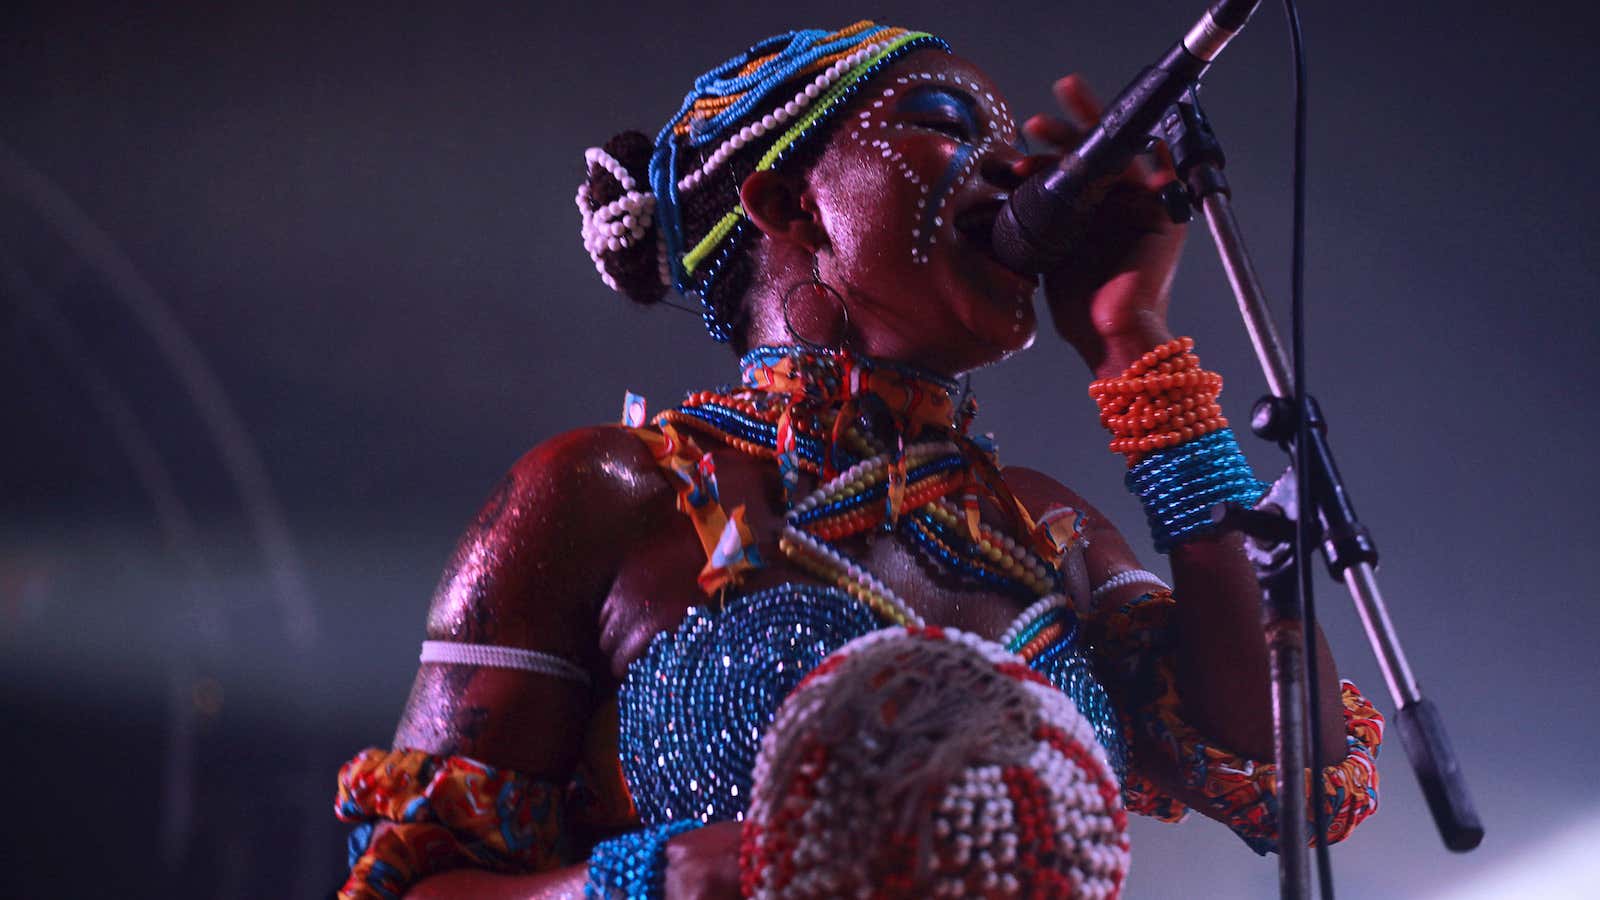 A backup singer at a show celebrating Nigerian legend Fela Kuti.